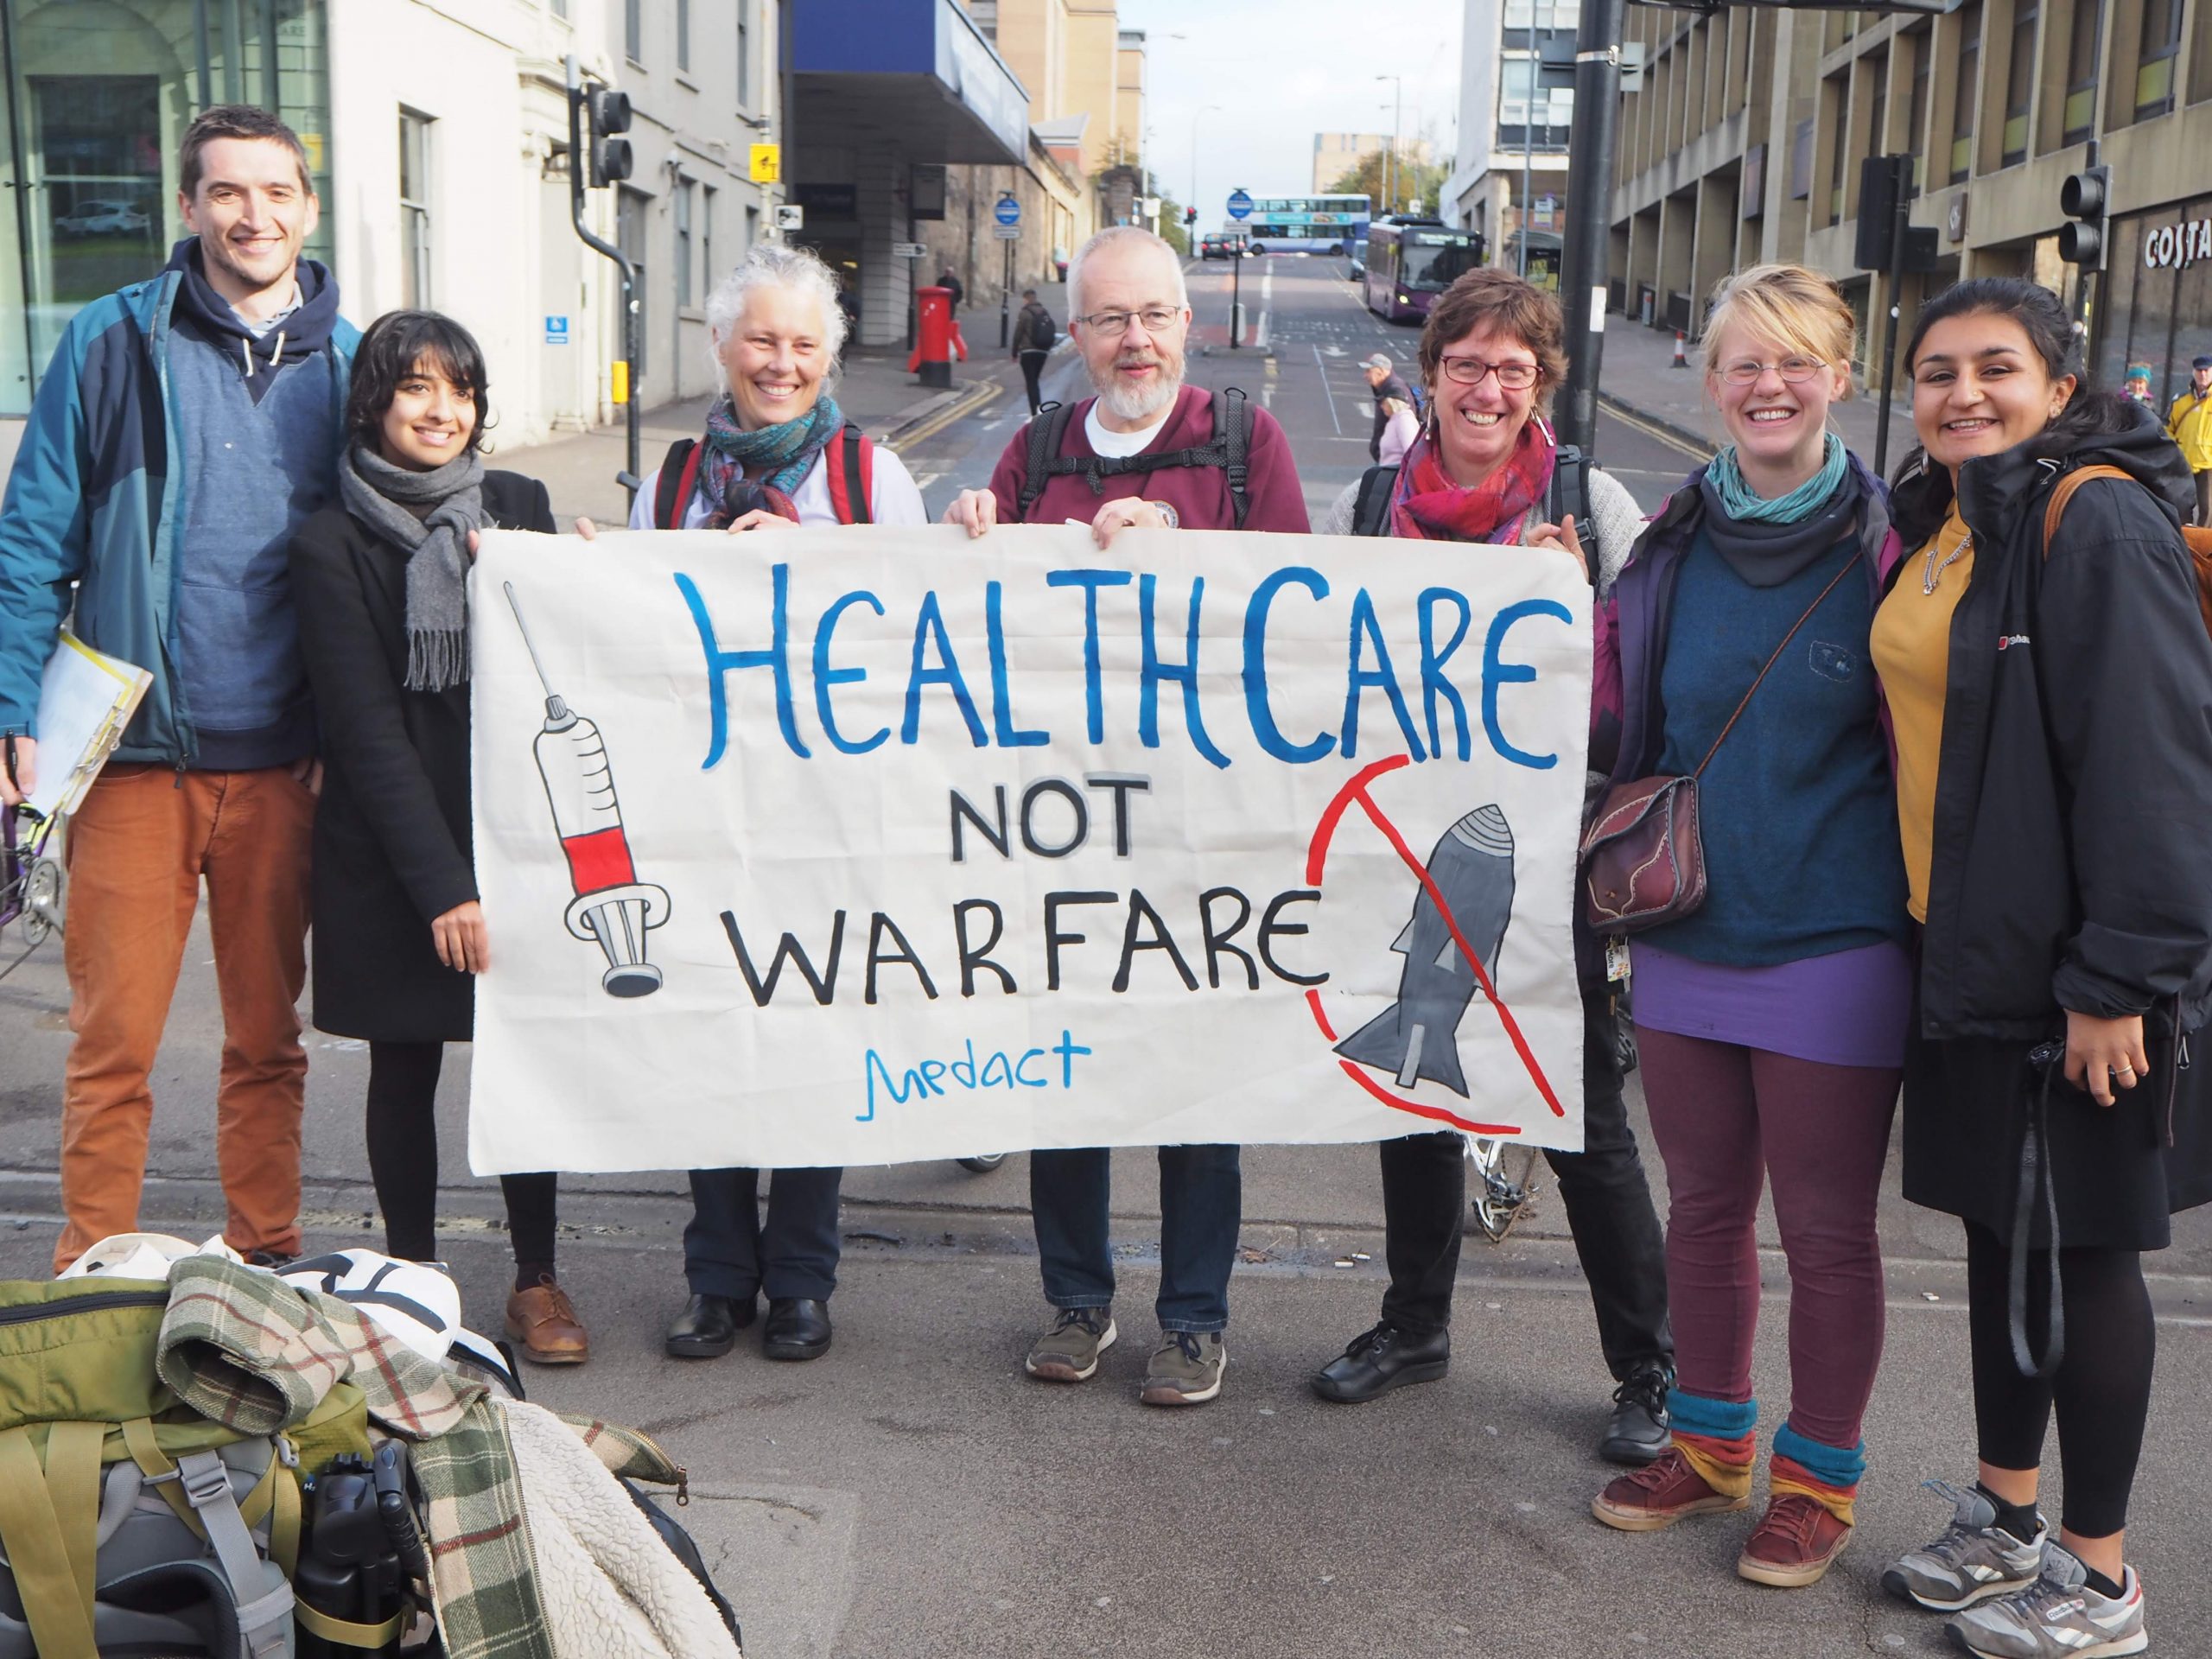 Healthcare Not Warfare – Medact